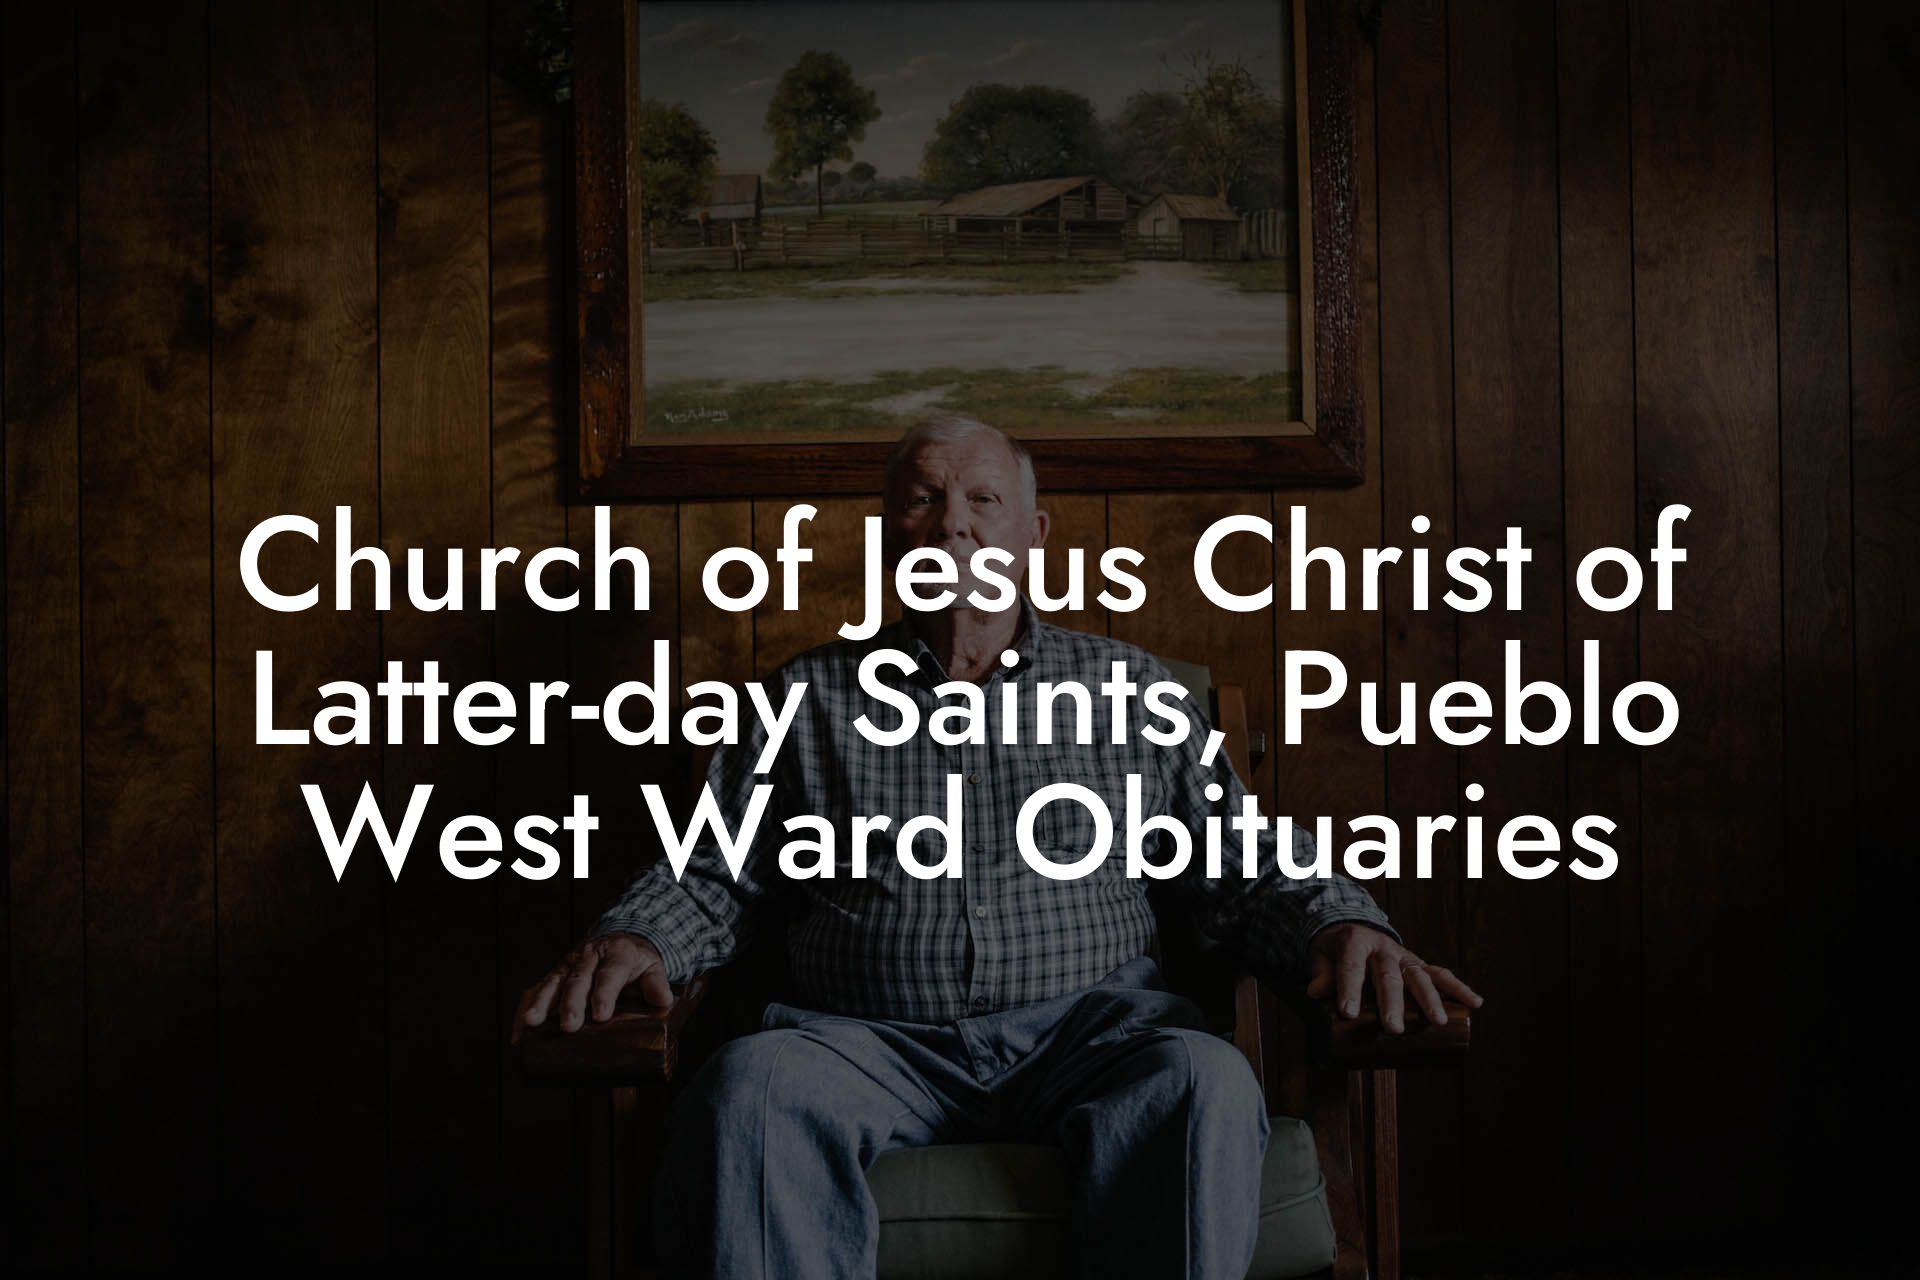 Church of Jesus Christ of Latter-day Saints, Pueblo West Ward Obituaries